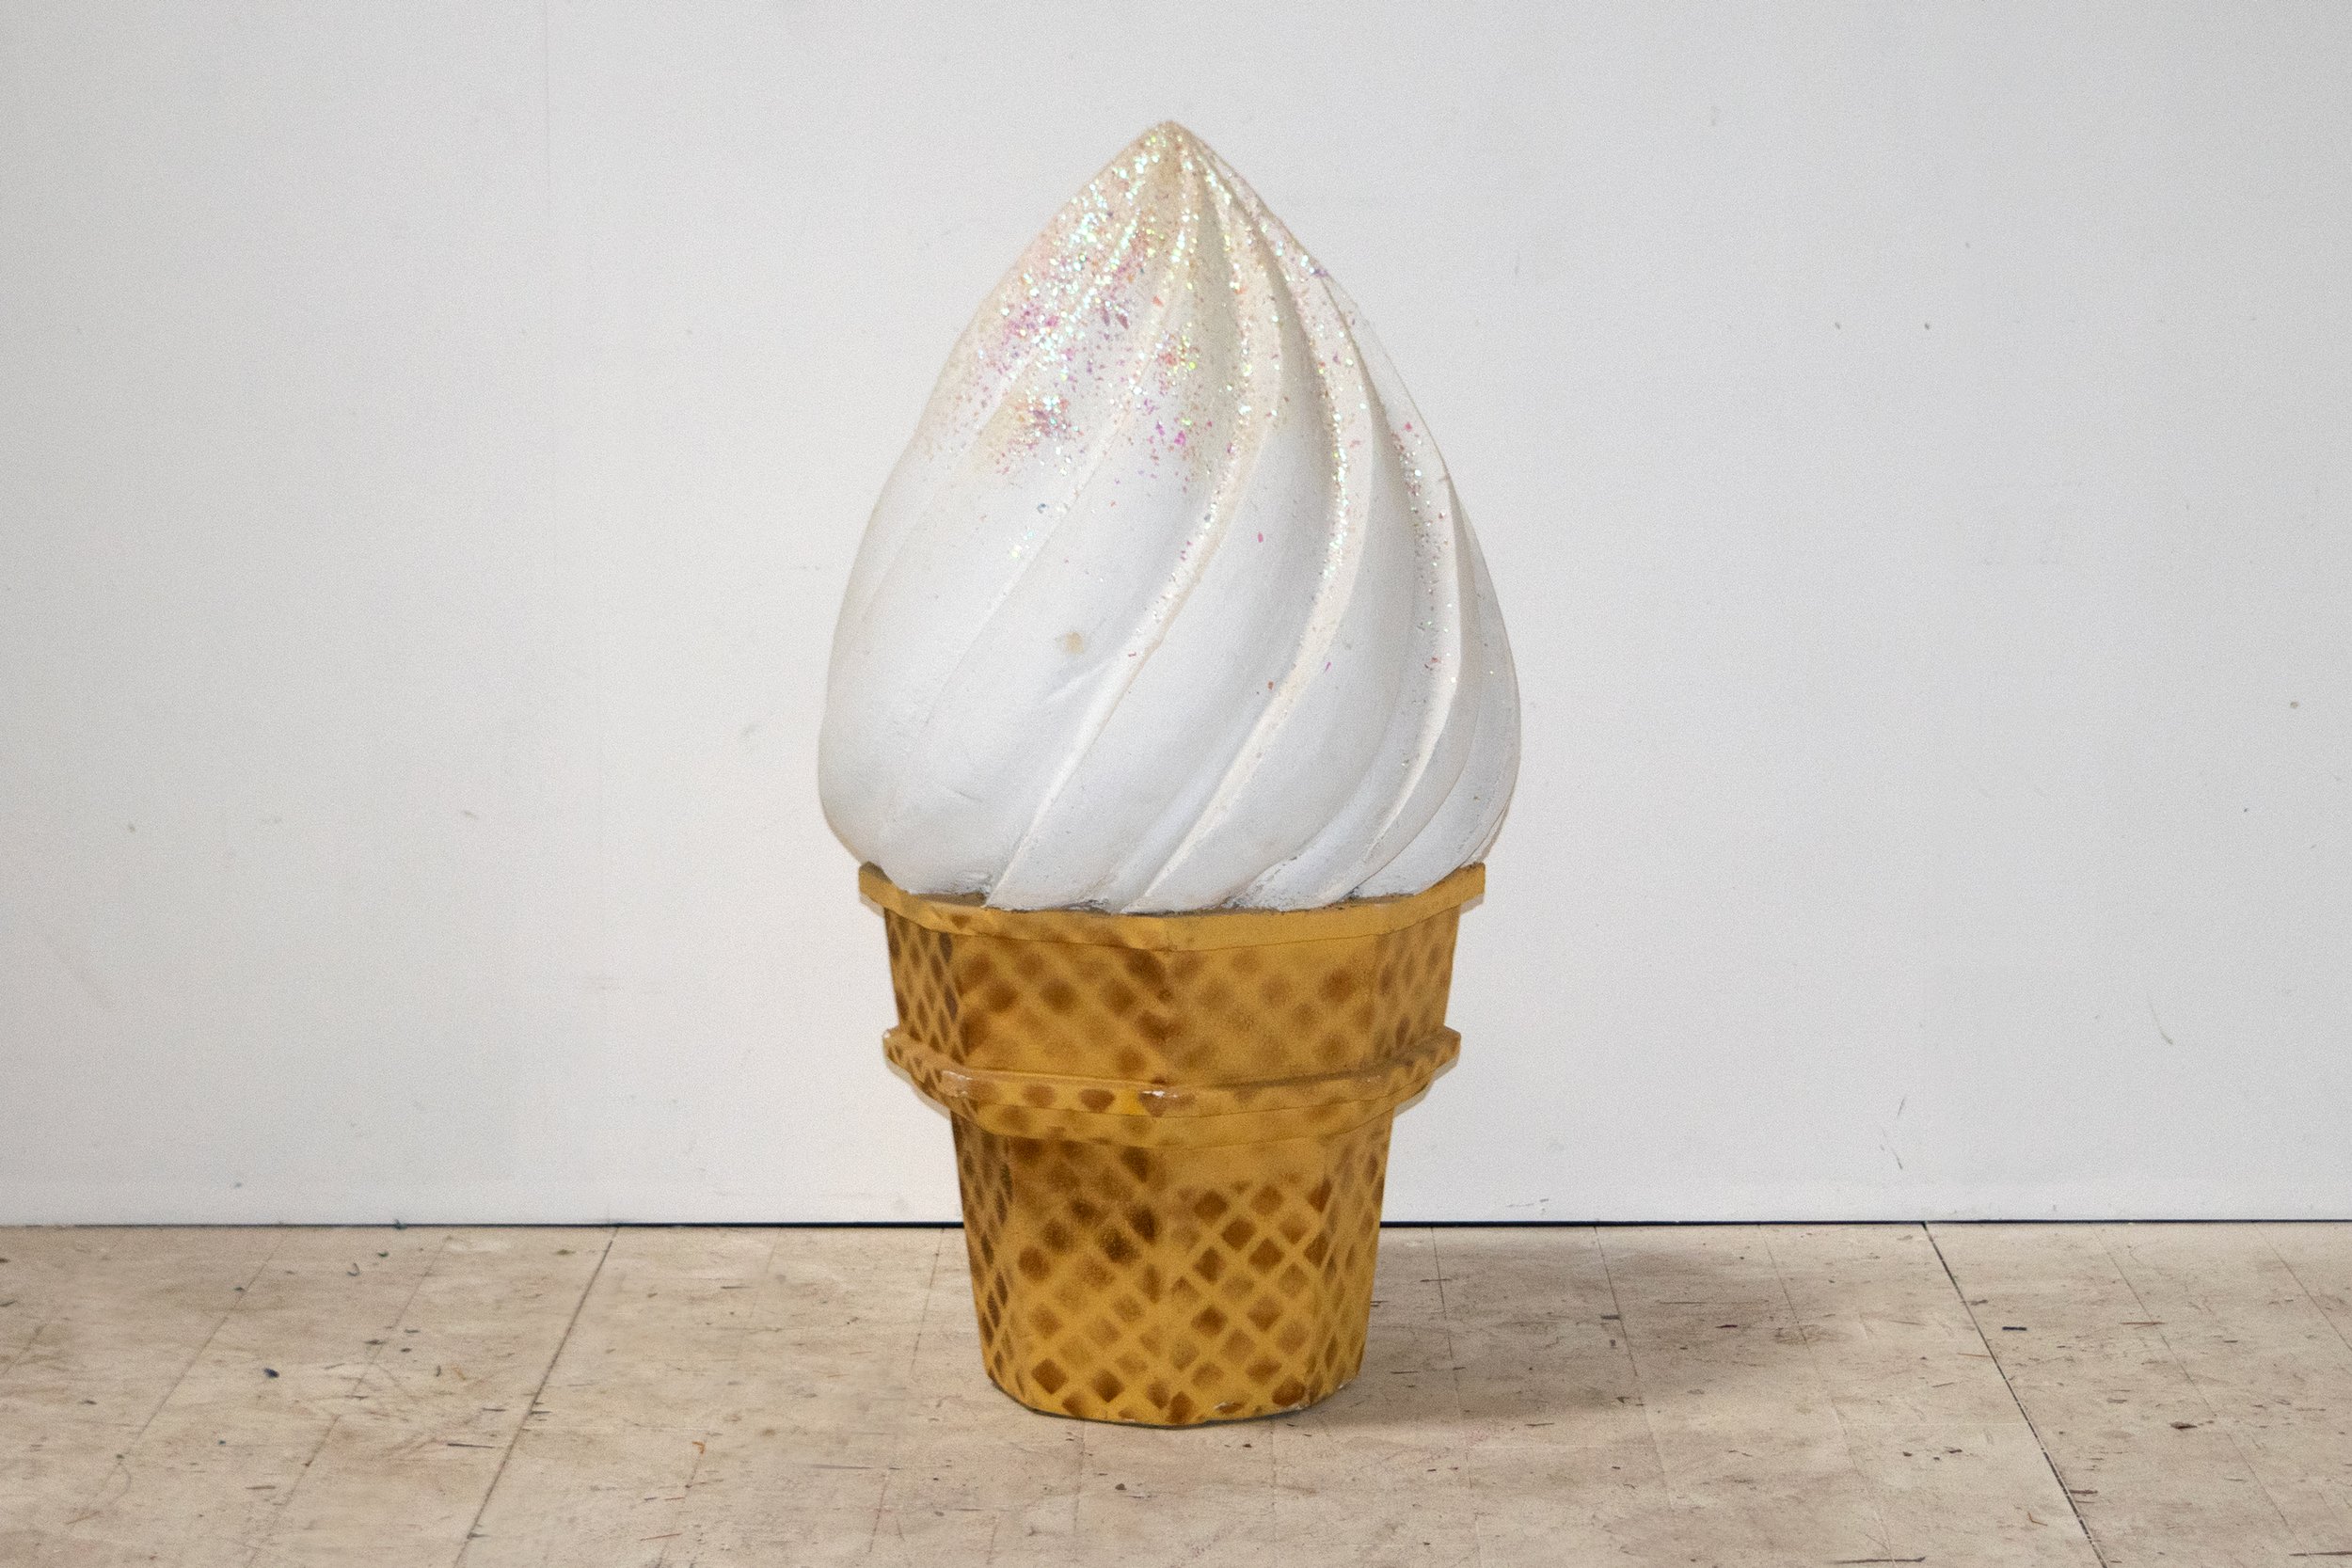 The Ice Cream Cone